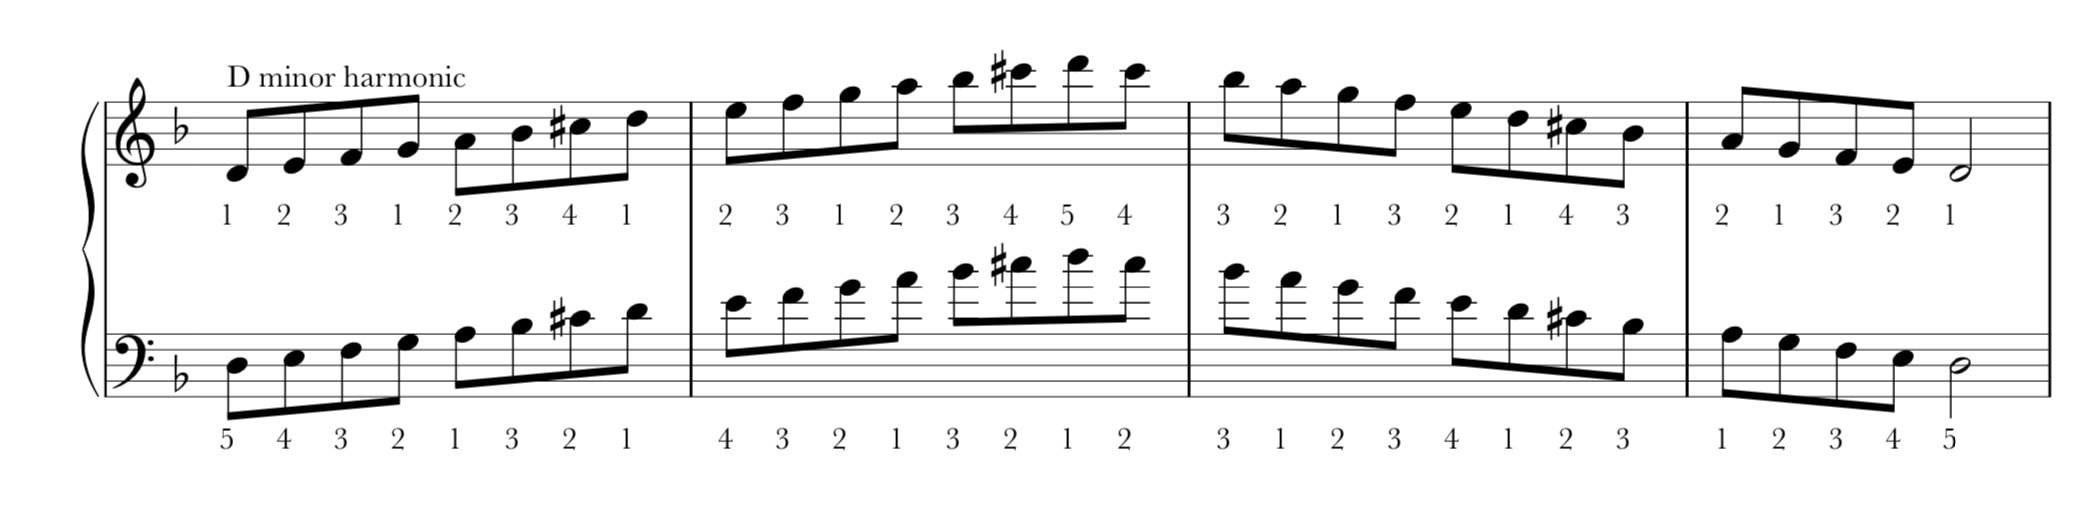 D minor harmonic scale